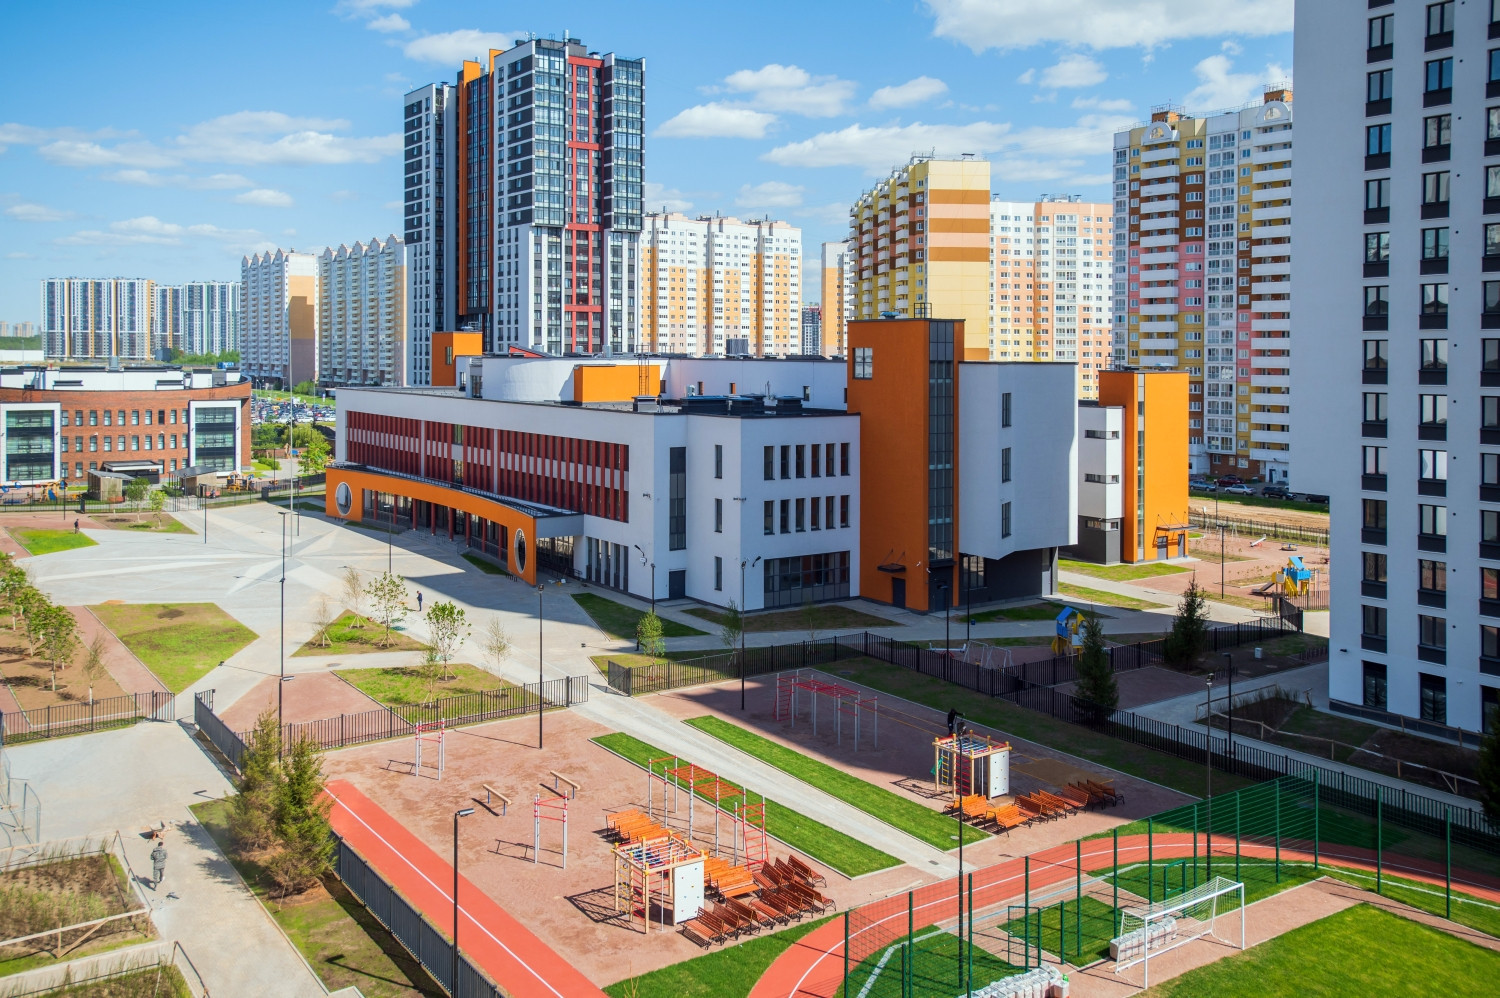 школа 630 приморского района санкт петербурга